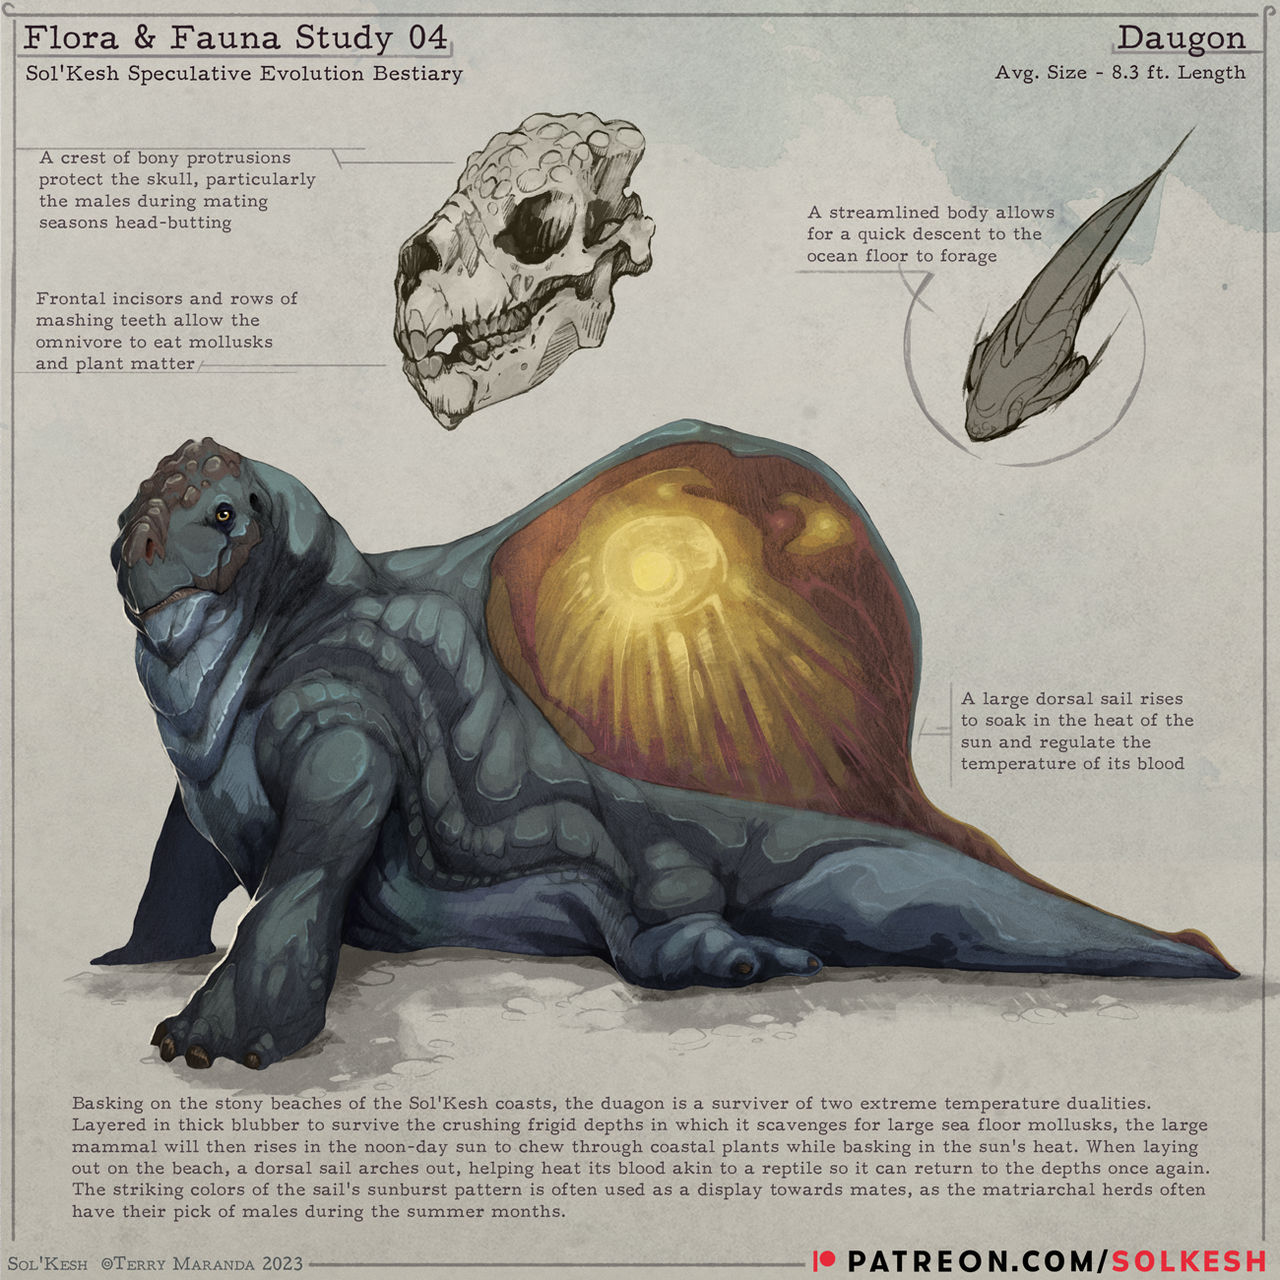 Armorhead Subspecies (Dragonslayer Codex) by SawyerLeeArt on DeviantArt